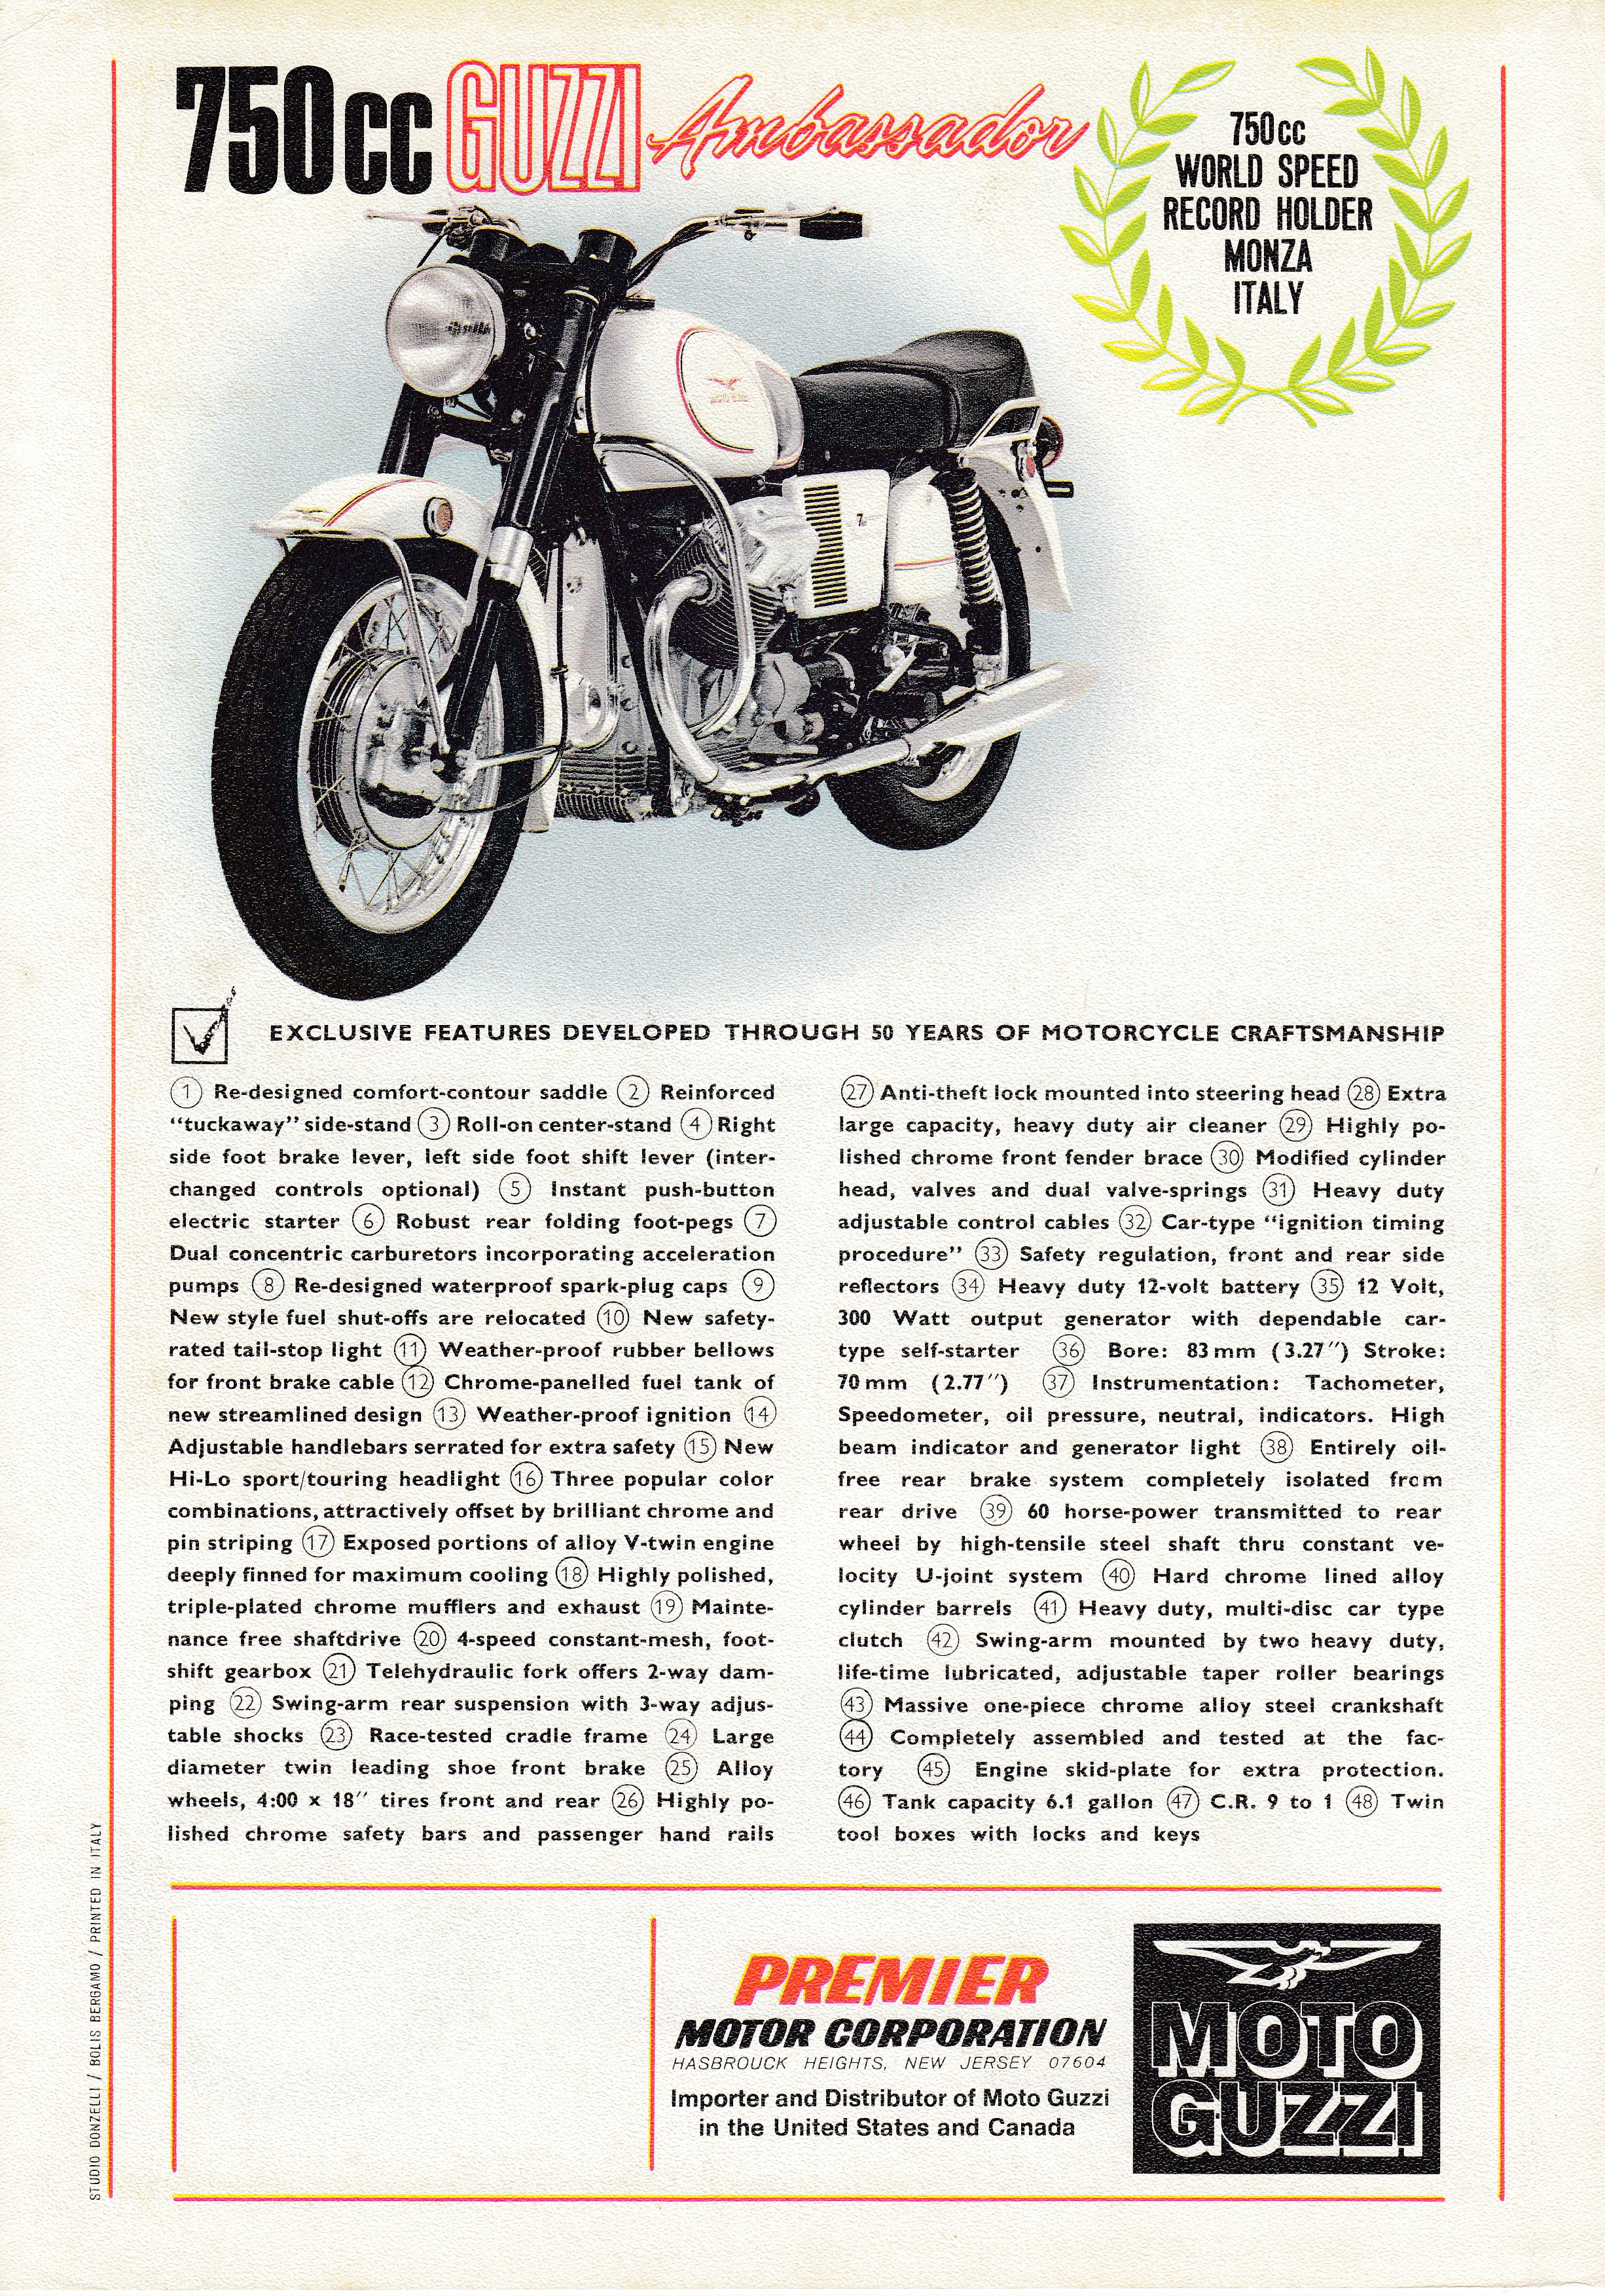 Moto Guzzi Ambassador Factory Brochure, Page 2 of 2.